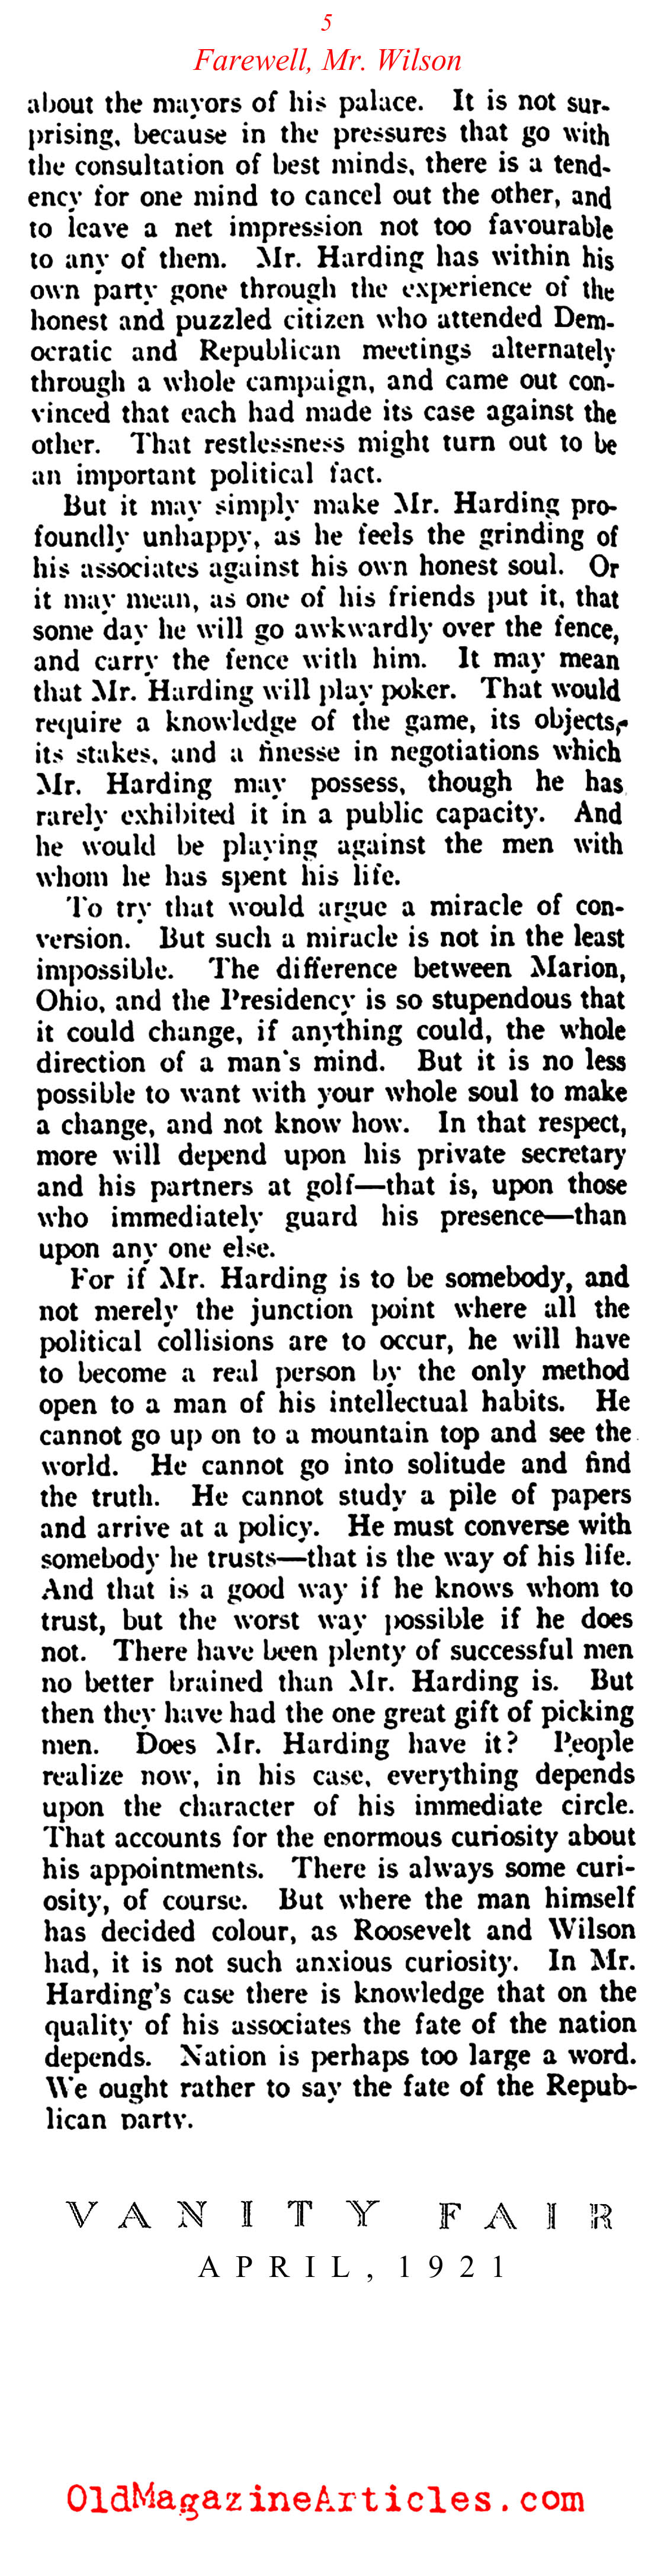 Farewell Woodrow Wilson (Vanity Fair Magazine, 1921)